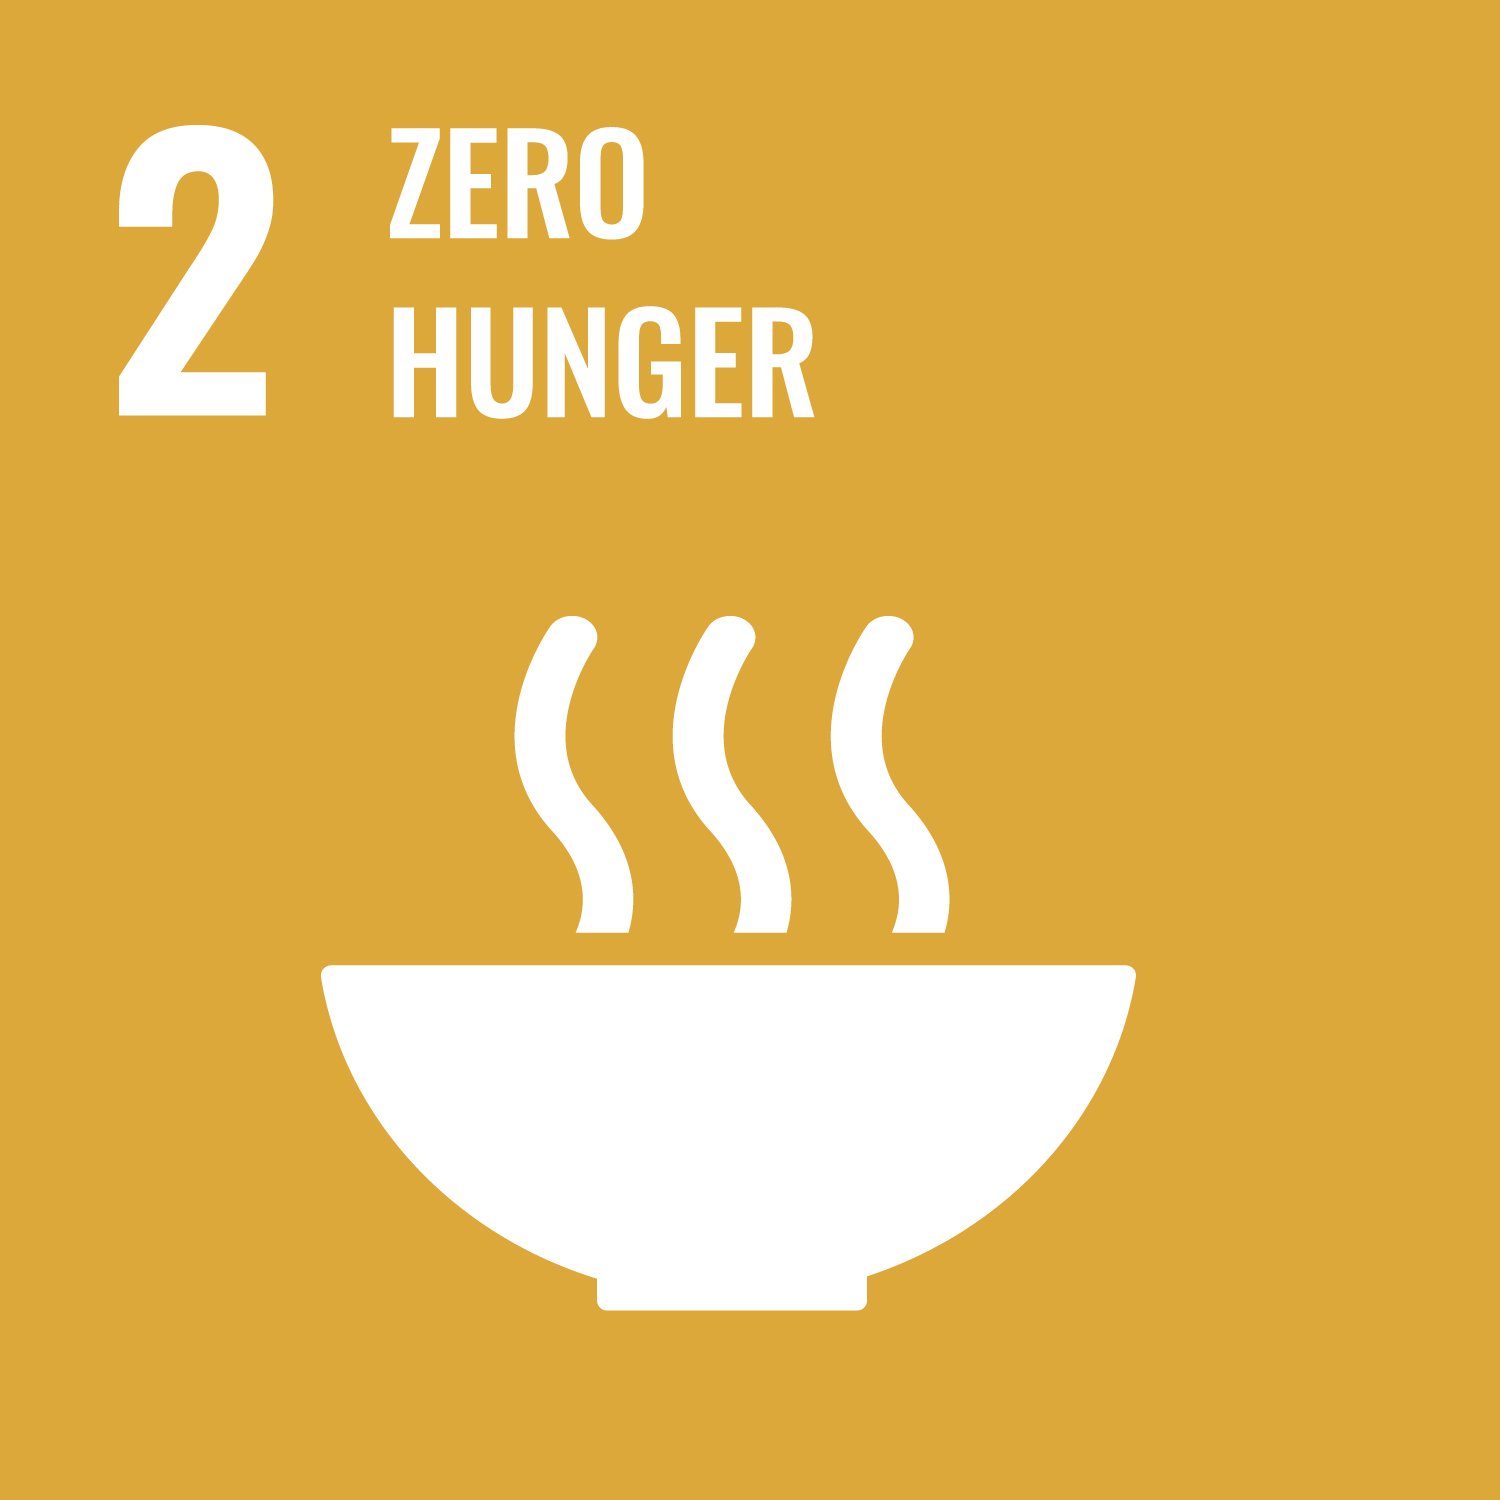 UN sustainable development goal 2 zero hunger